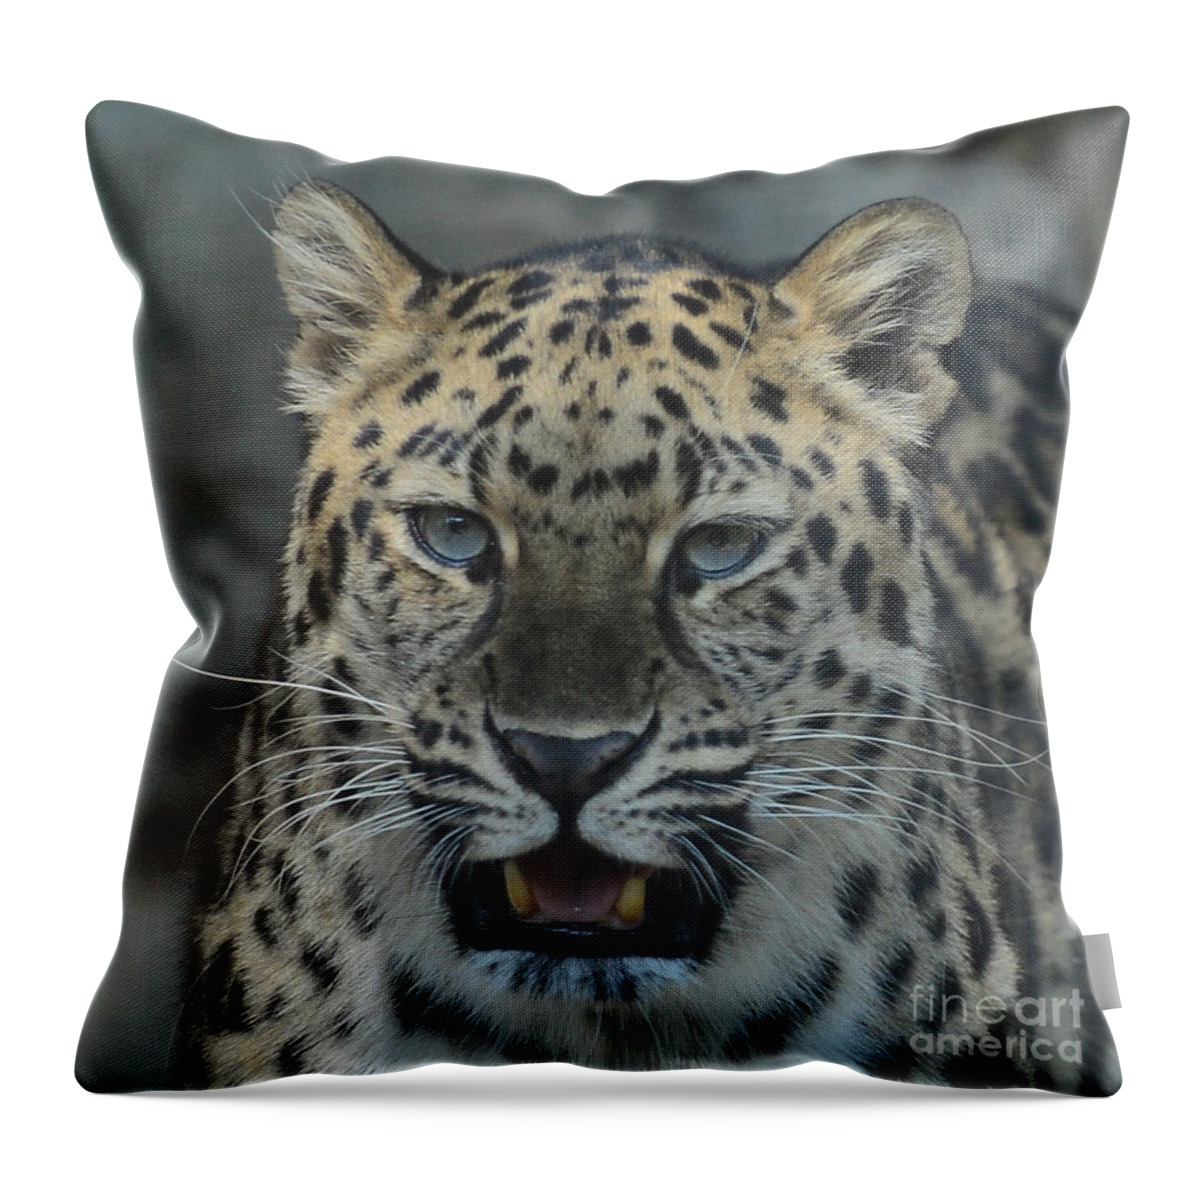 Jaguar Throw Pillow featuring the photograph The eyes of a Jaguar by Paul Ward